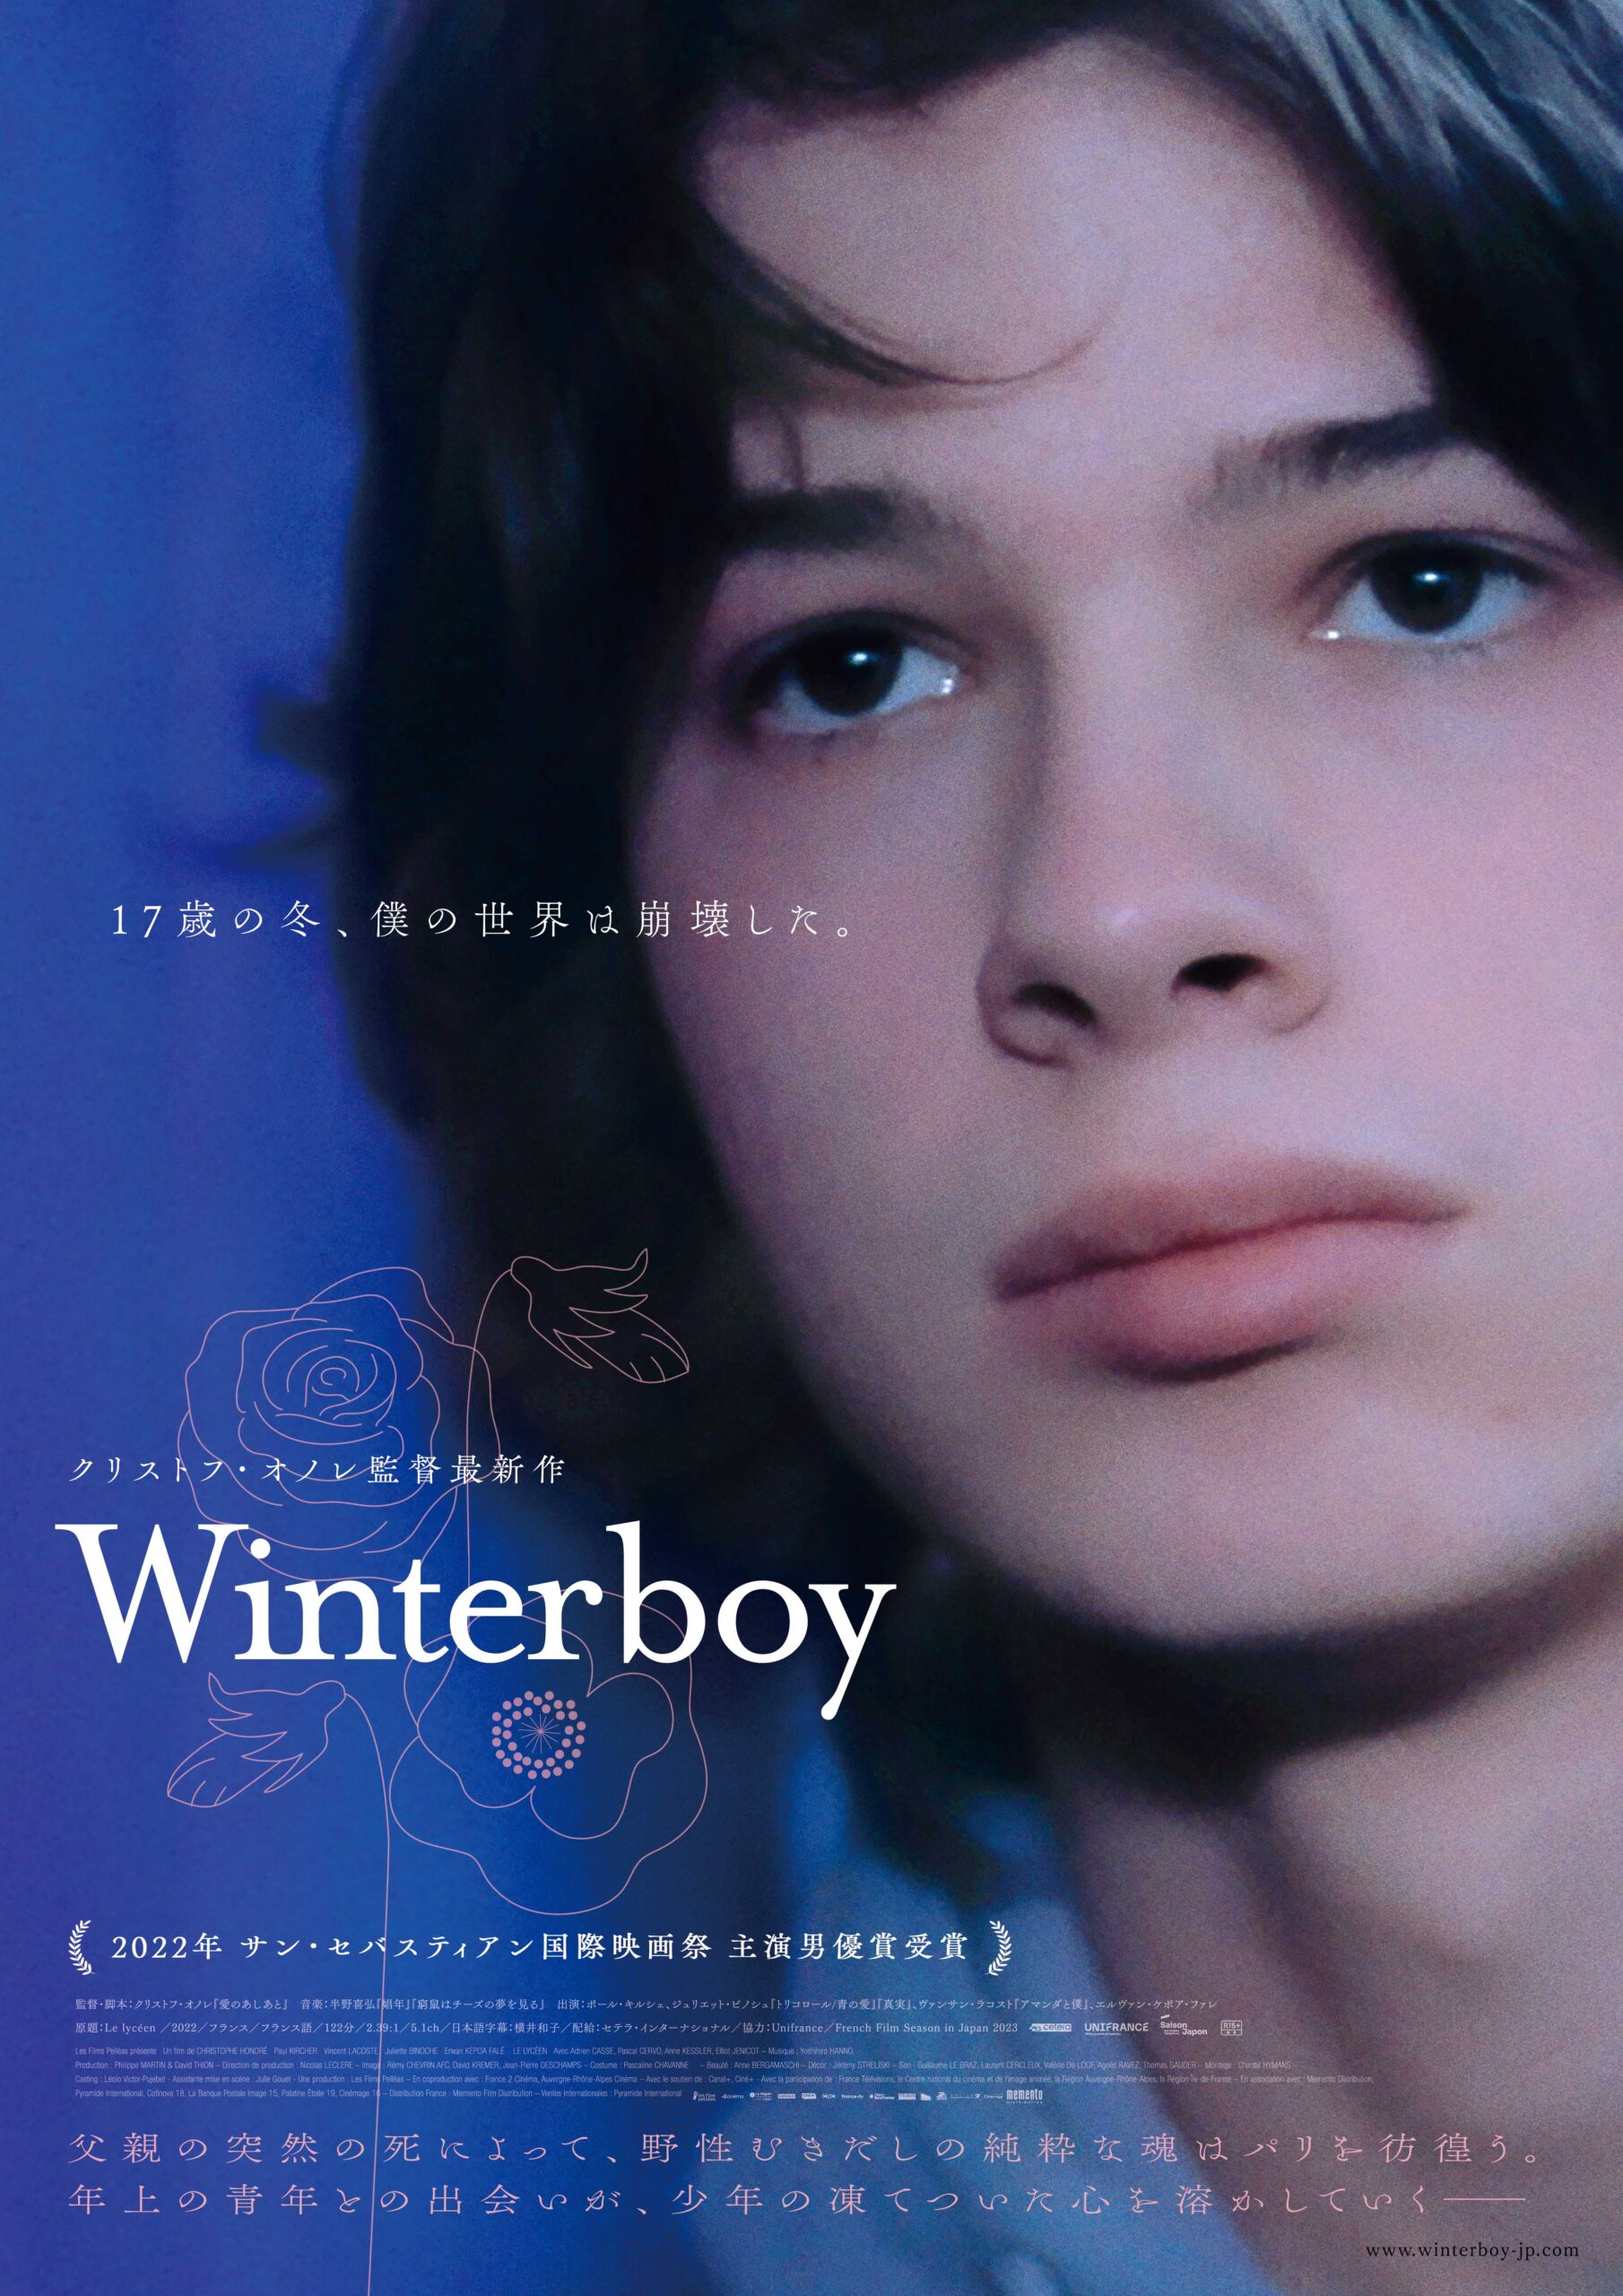 Winter boy